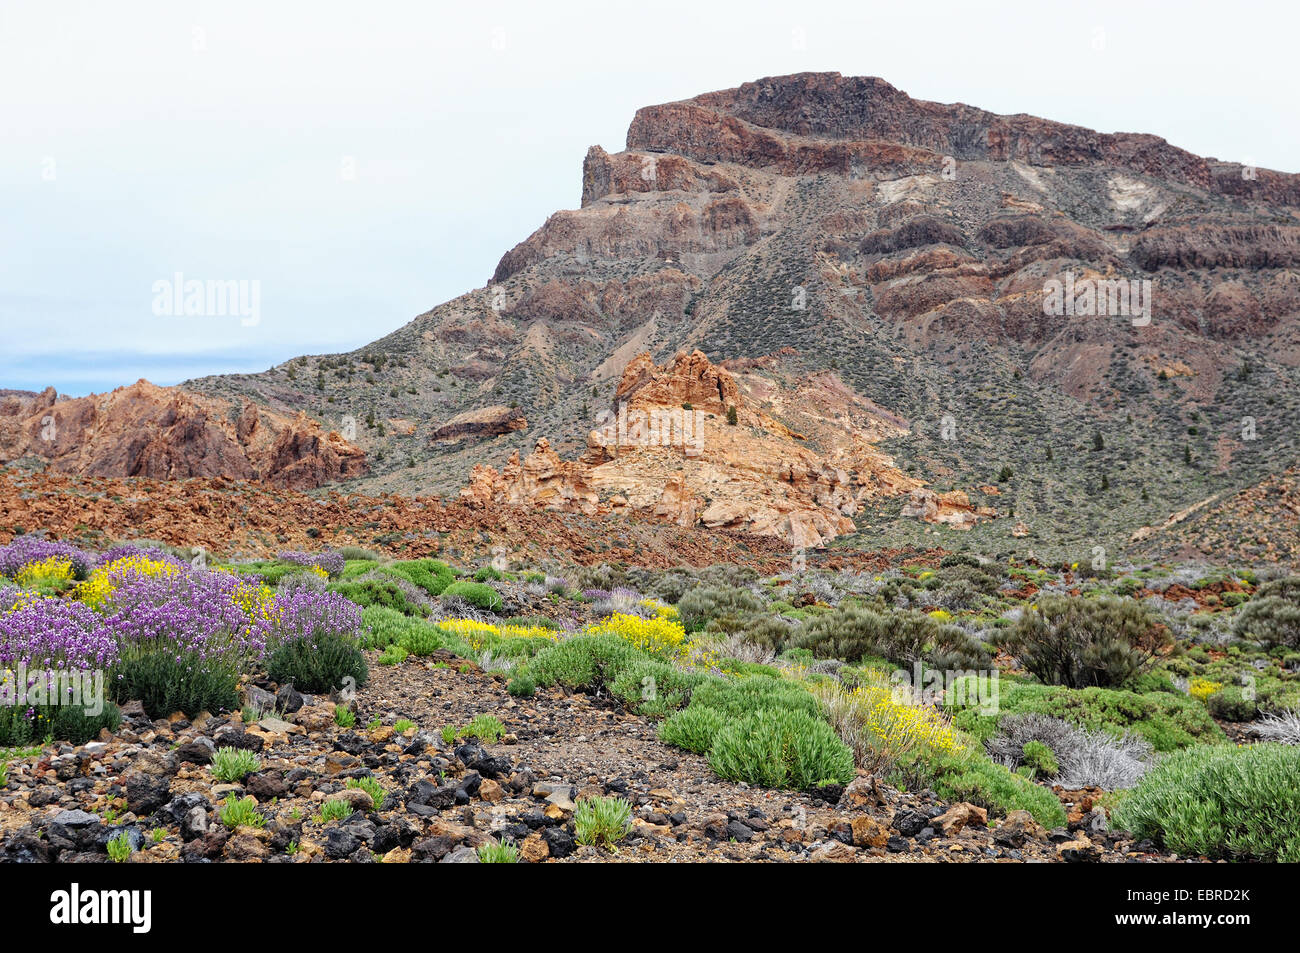 El Teide national park at Tenerife (Spain). Typical volcanic landscape and vegetation. Stock Photo